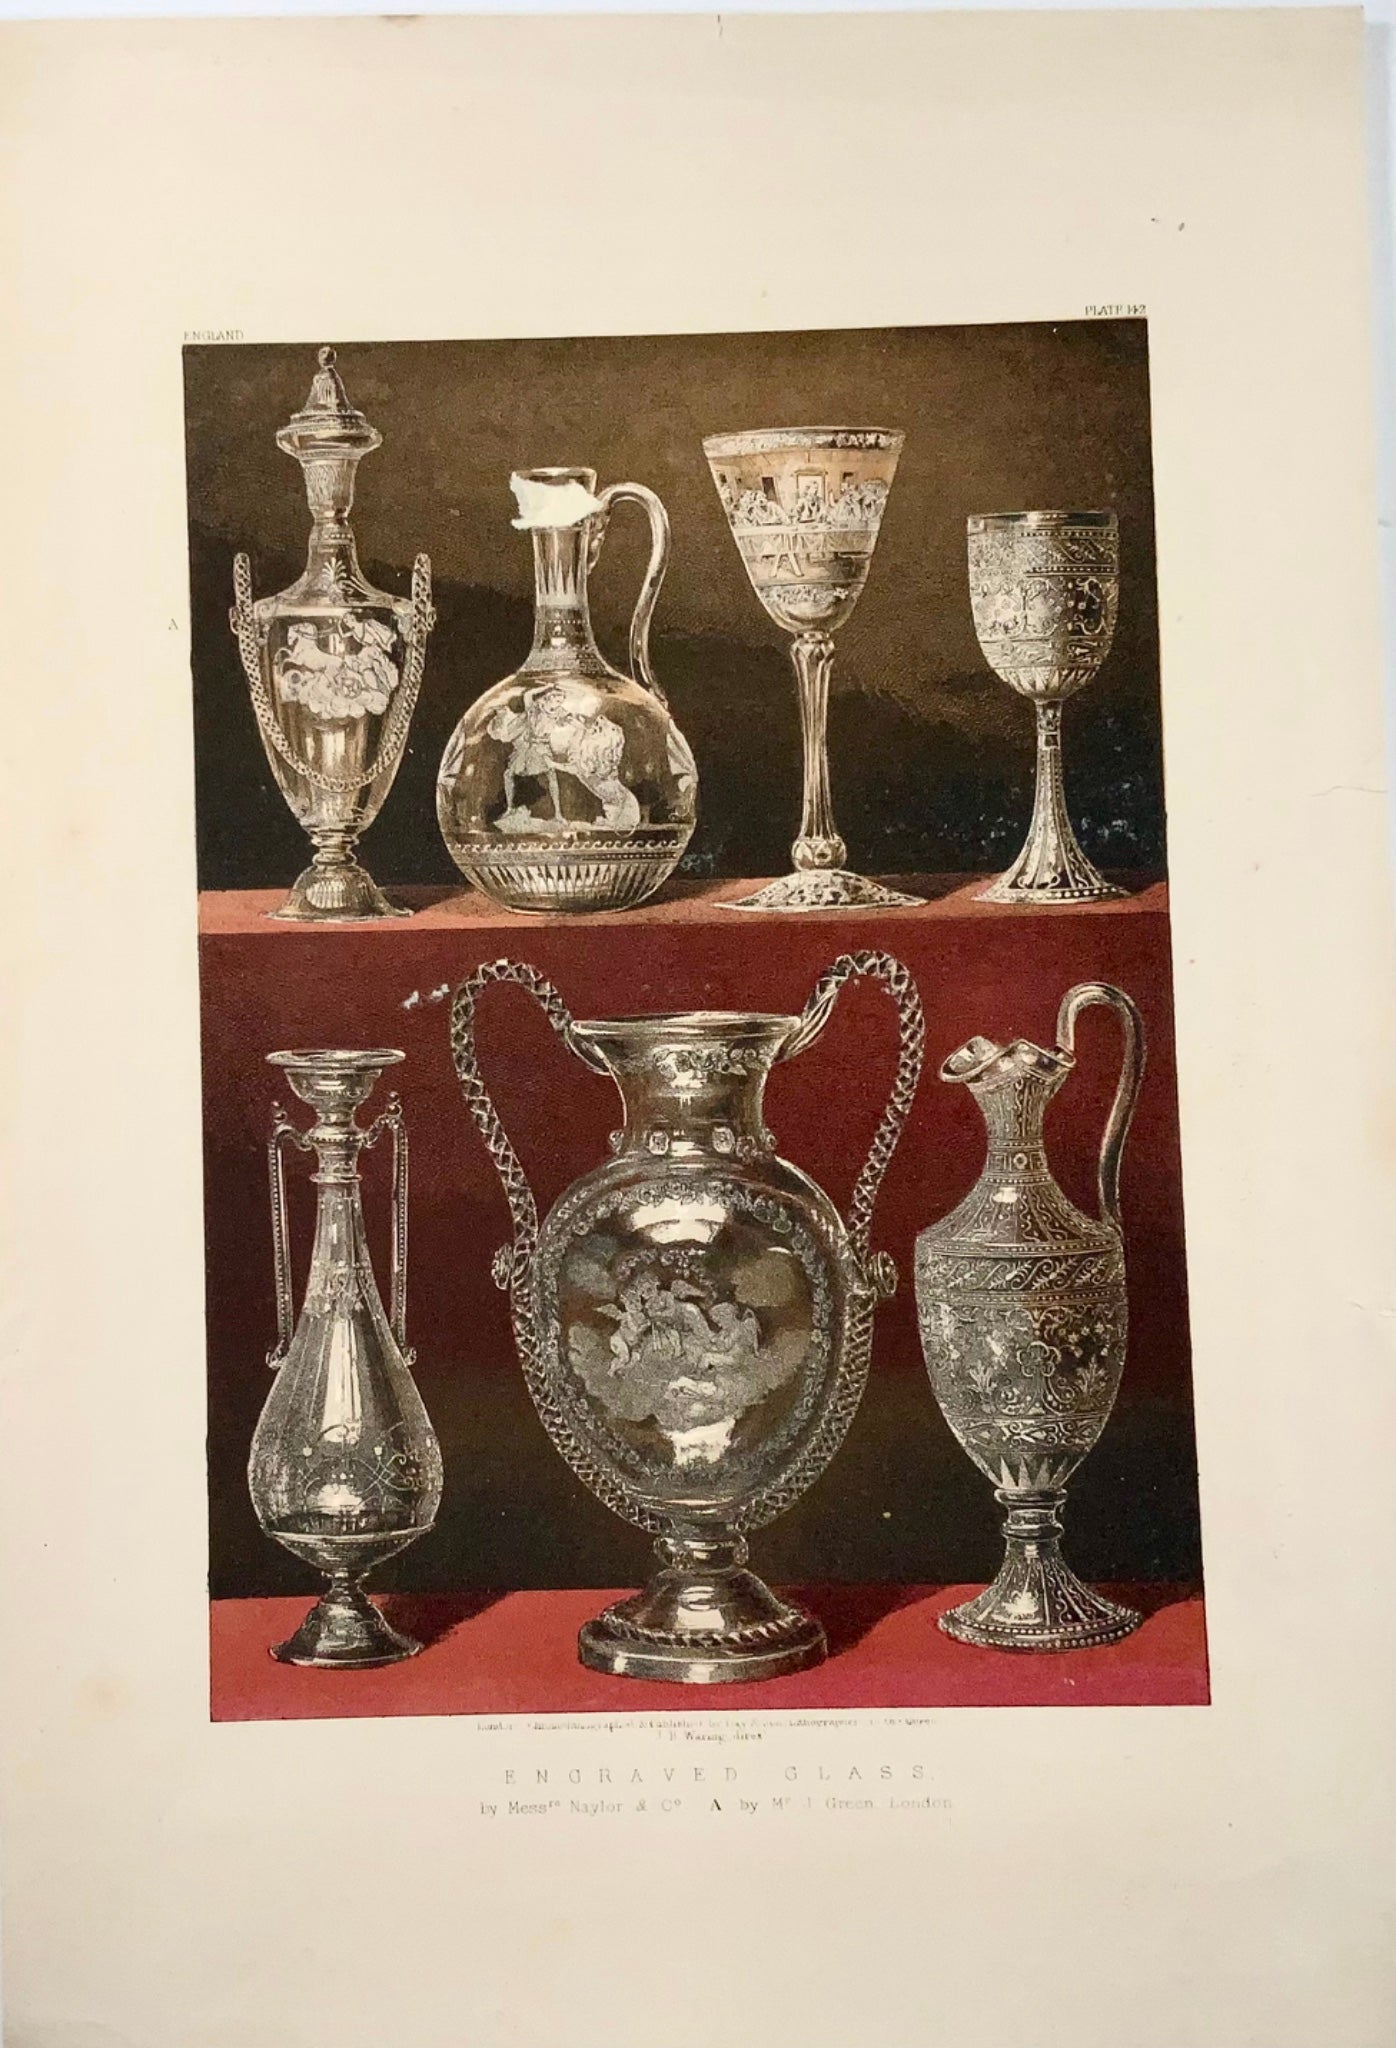 1862 Engraved Glass, Waring, large folio, chromolithograph, art